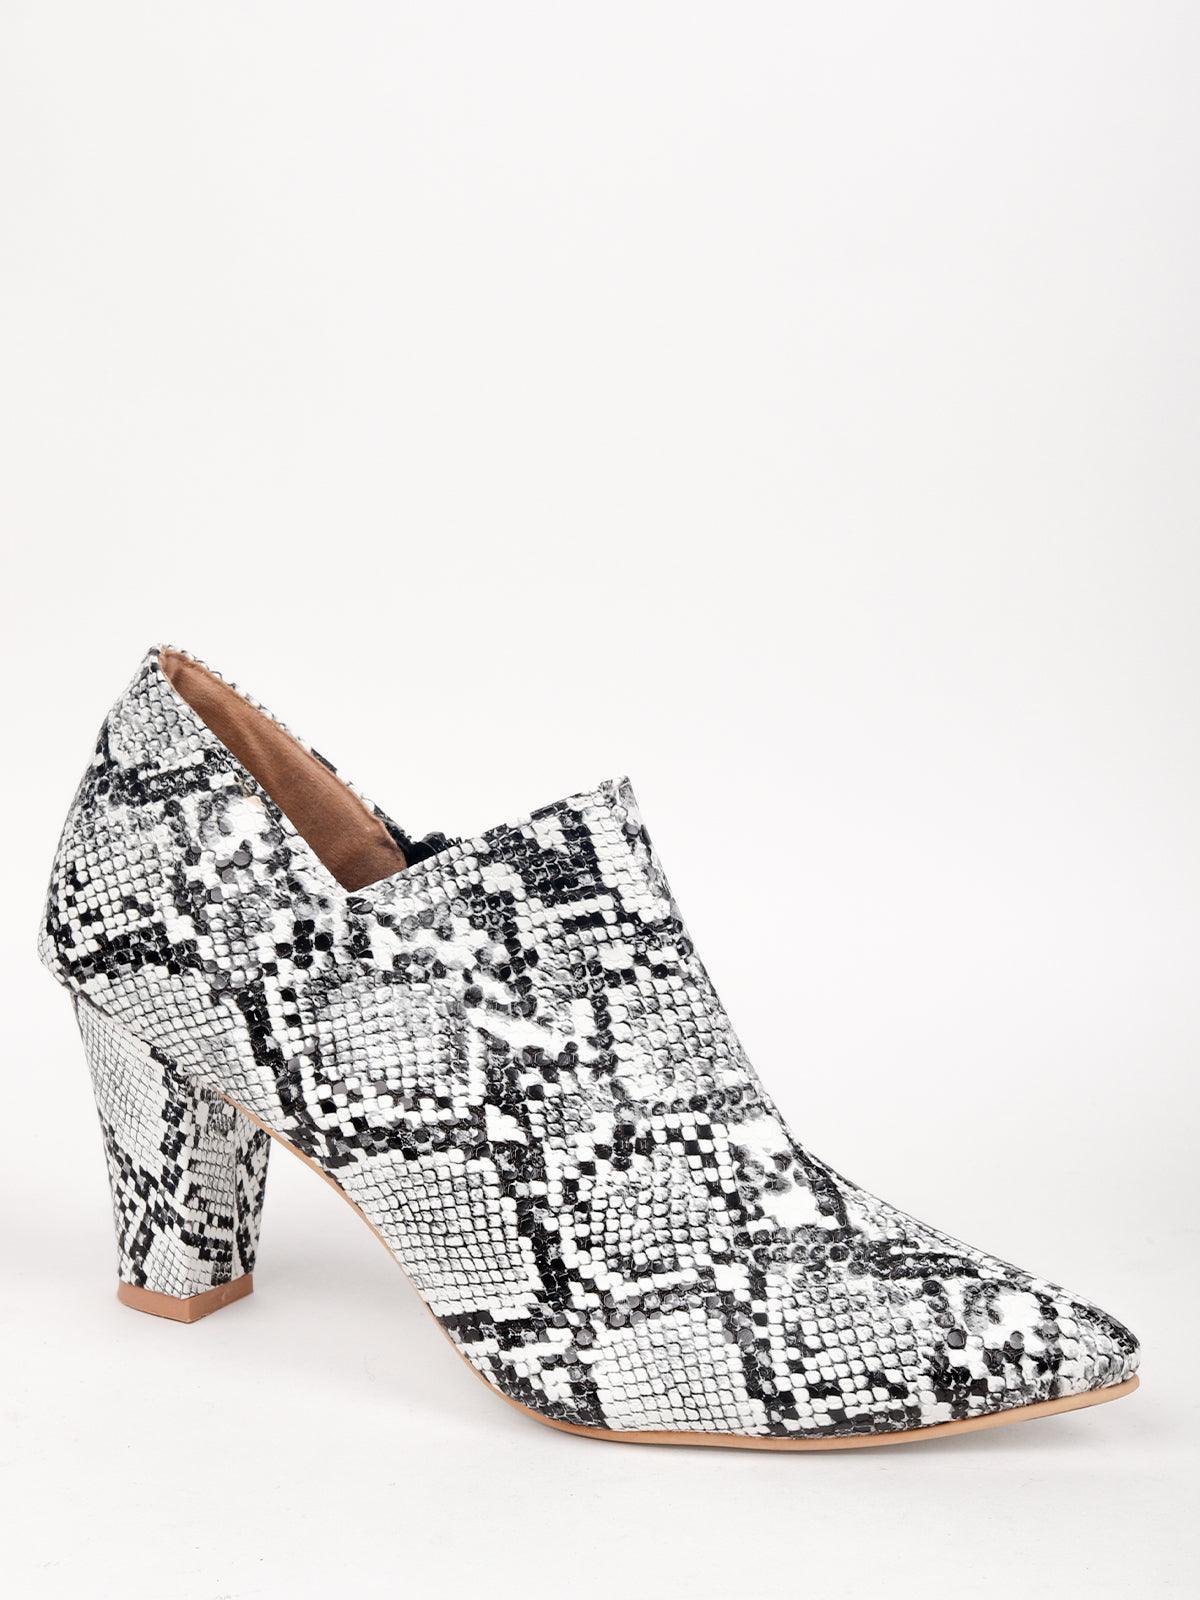 Black & Amp;  White Snakeskin Print Heeled Boots. - Odette